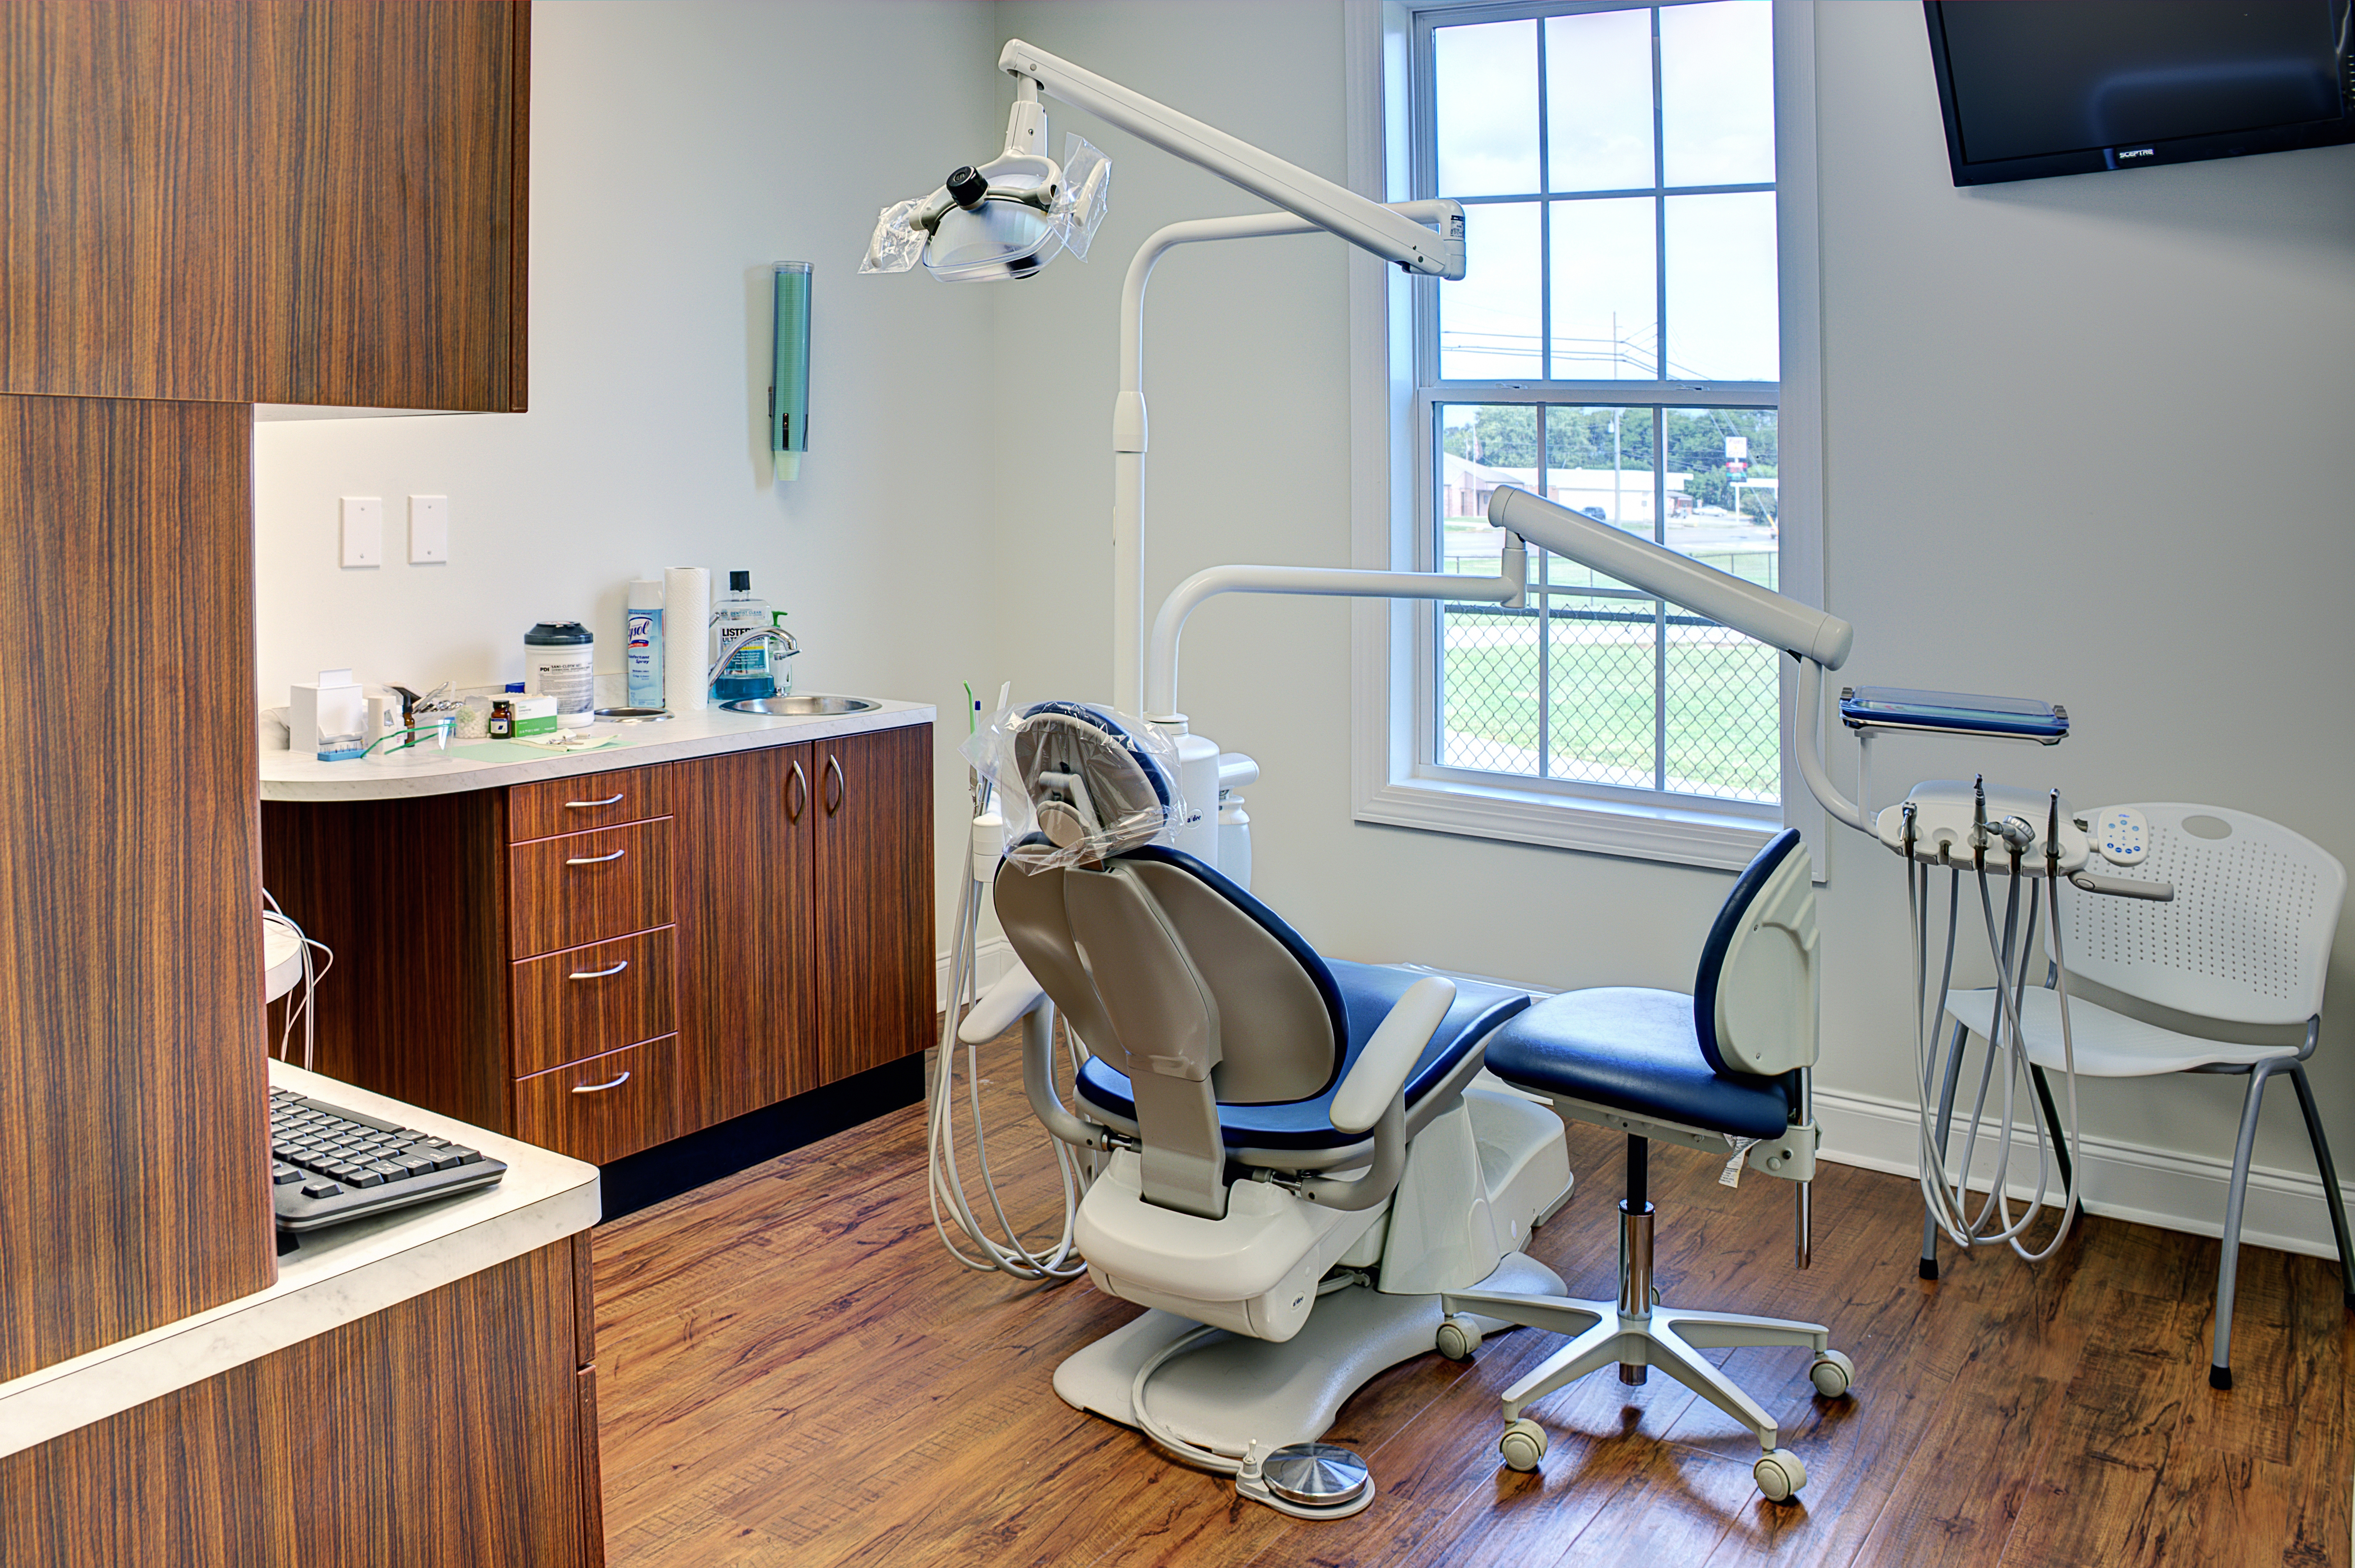 The Best Ways to Market Your Dental Practice: Part 1 - Your Online Presence